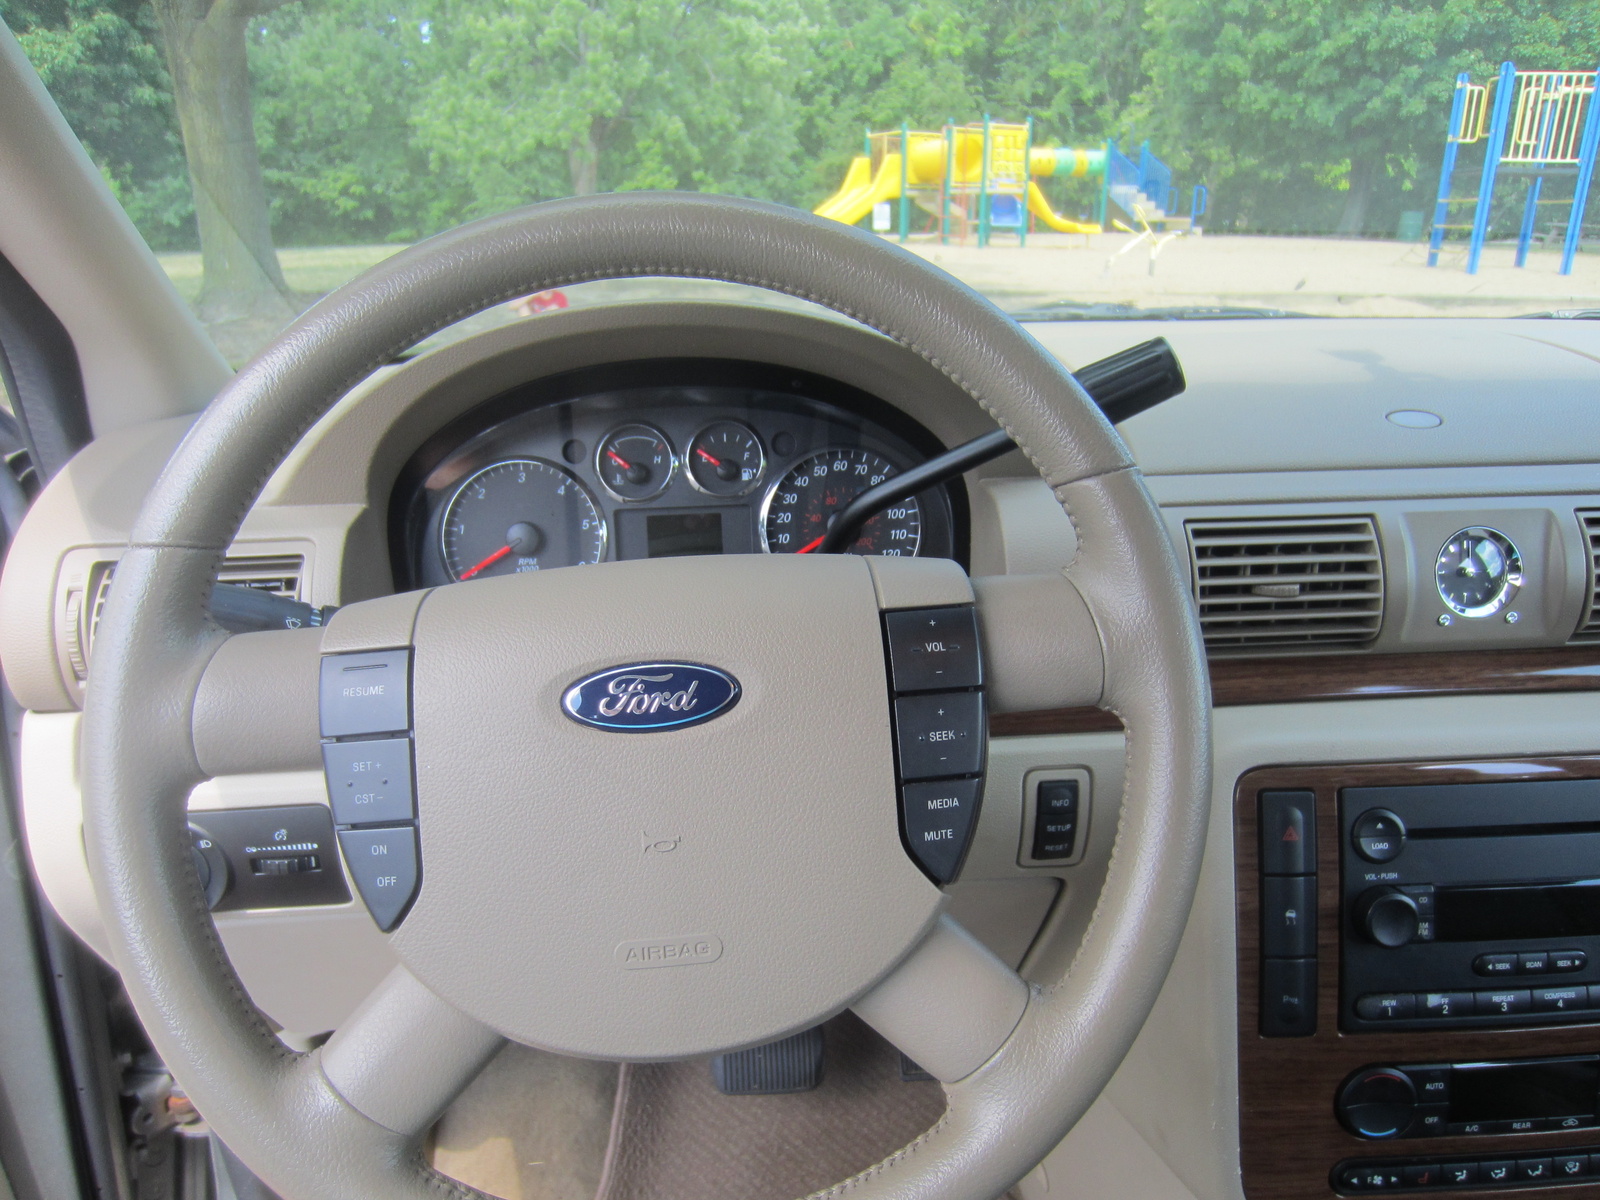 Ford freestar interiors equipment #8